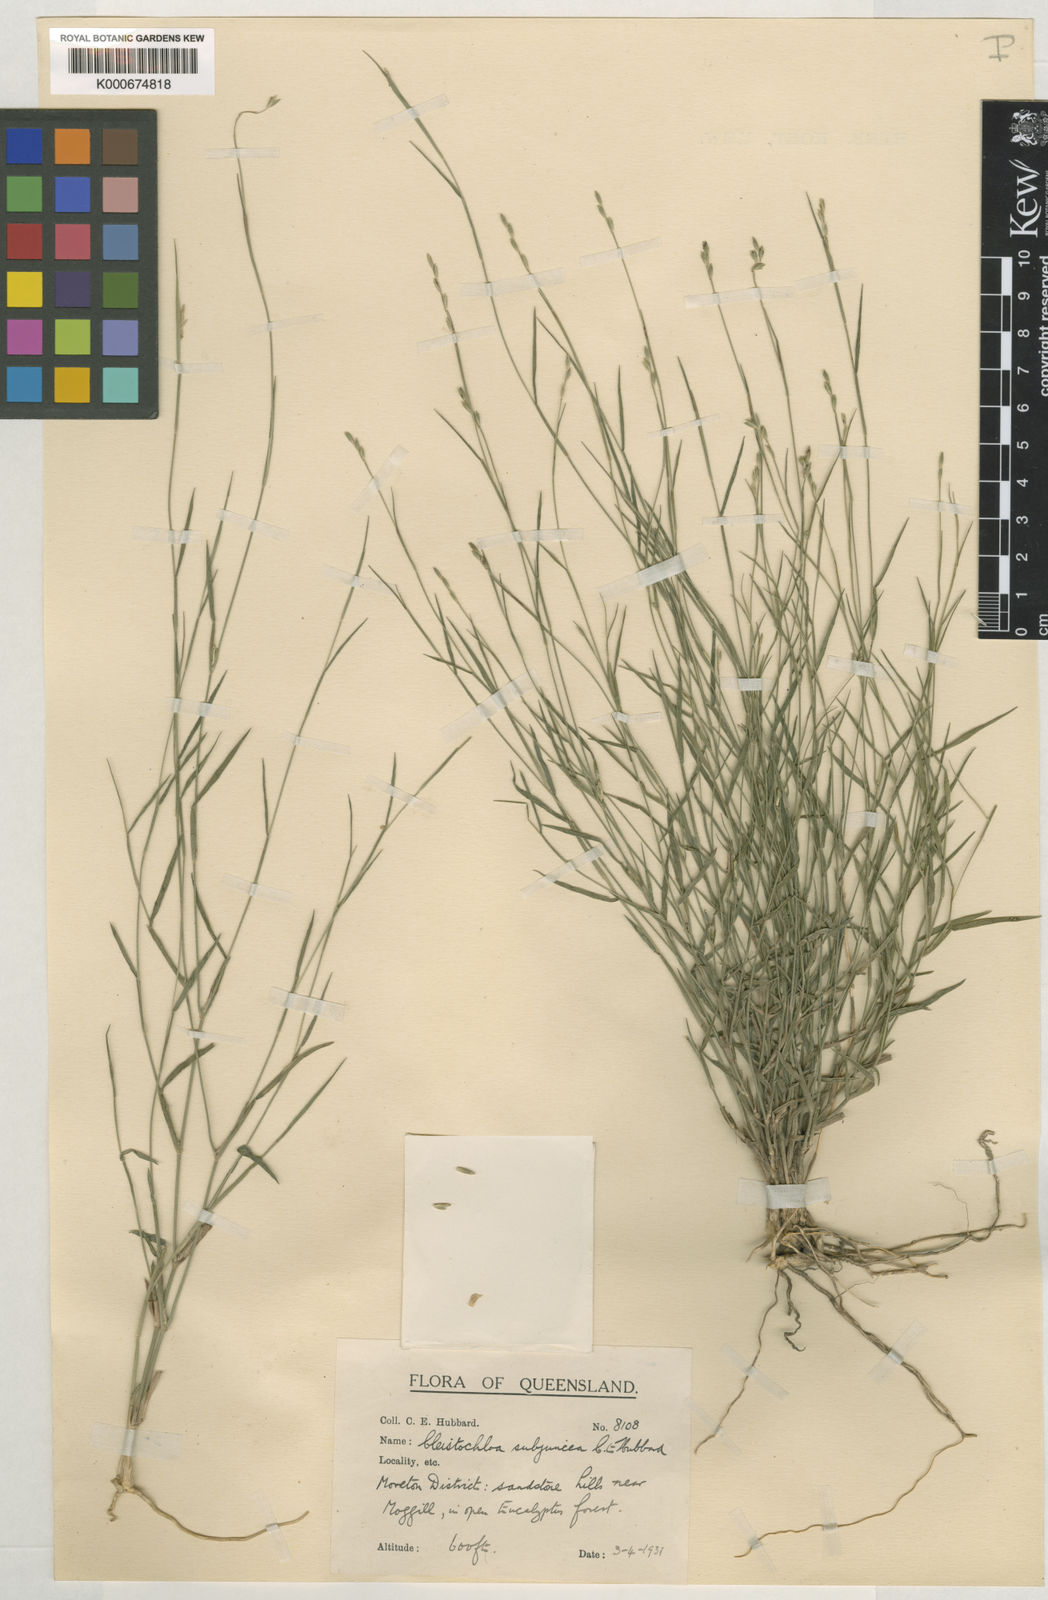 Cleistochloa subjuncea C.E.Hubb. | Plants of the World Online | Kew Science